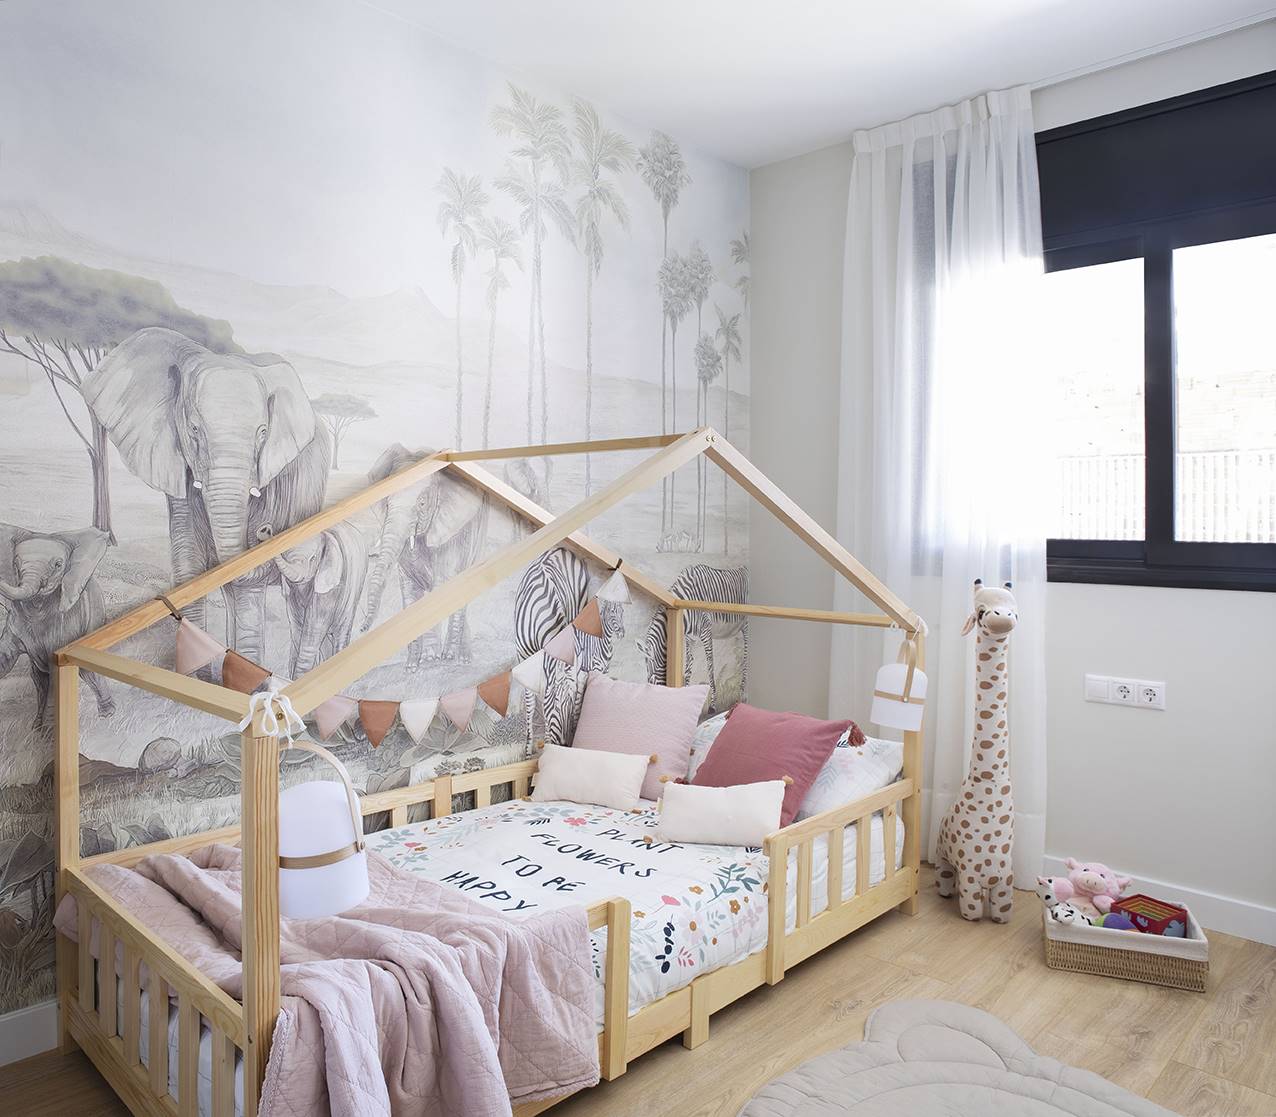 Dormitorio infantil de la casa en Mataró, proyecto del estudio de interiorismo Tinda's Project.